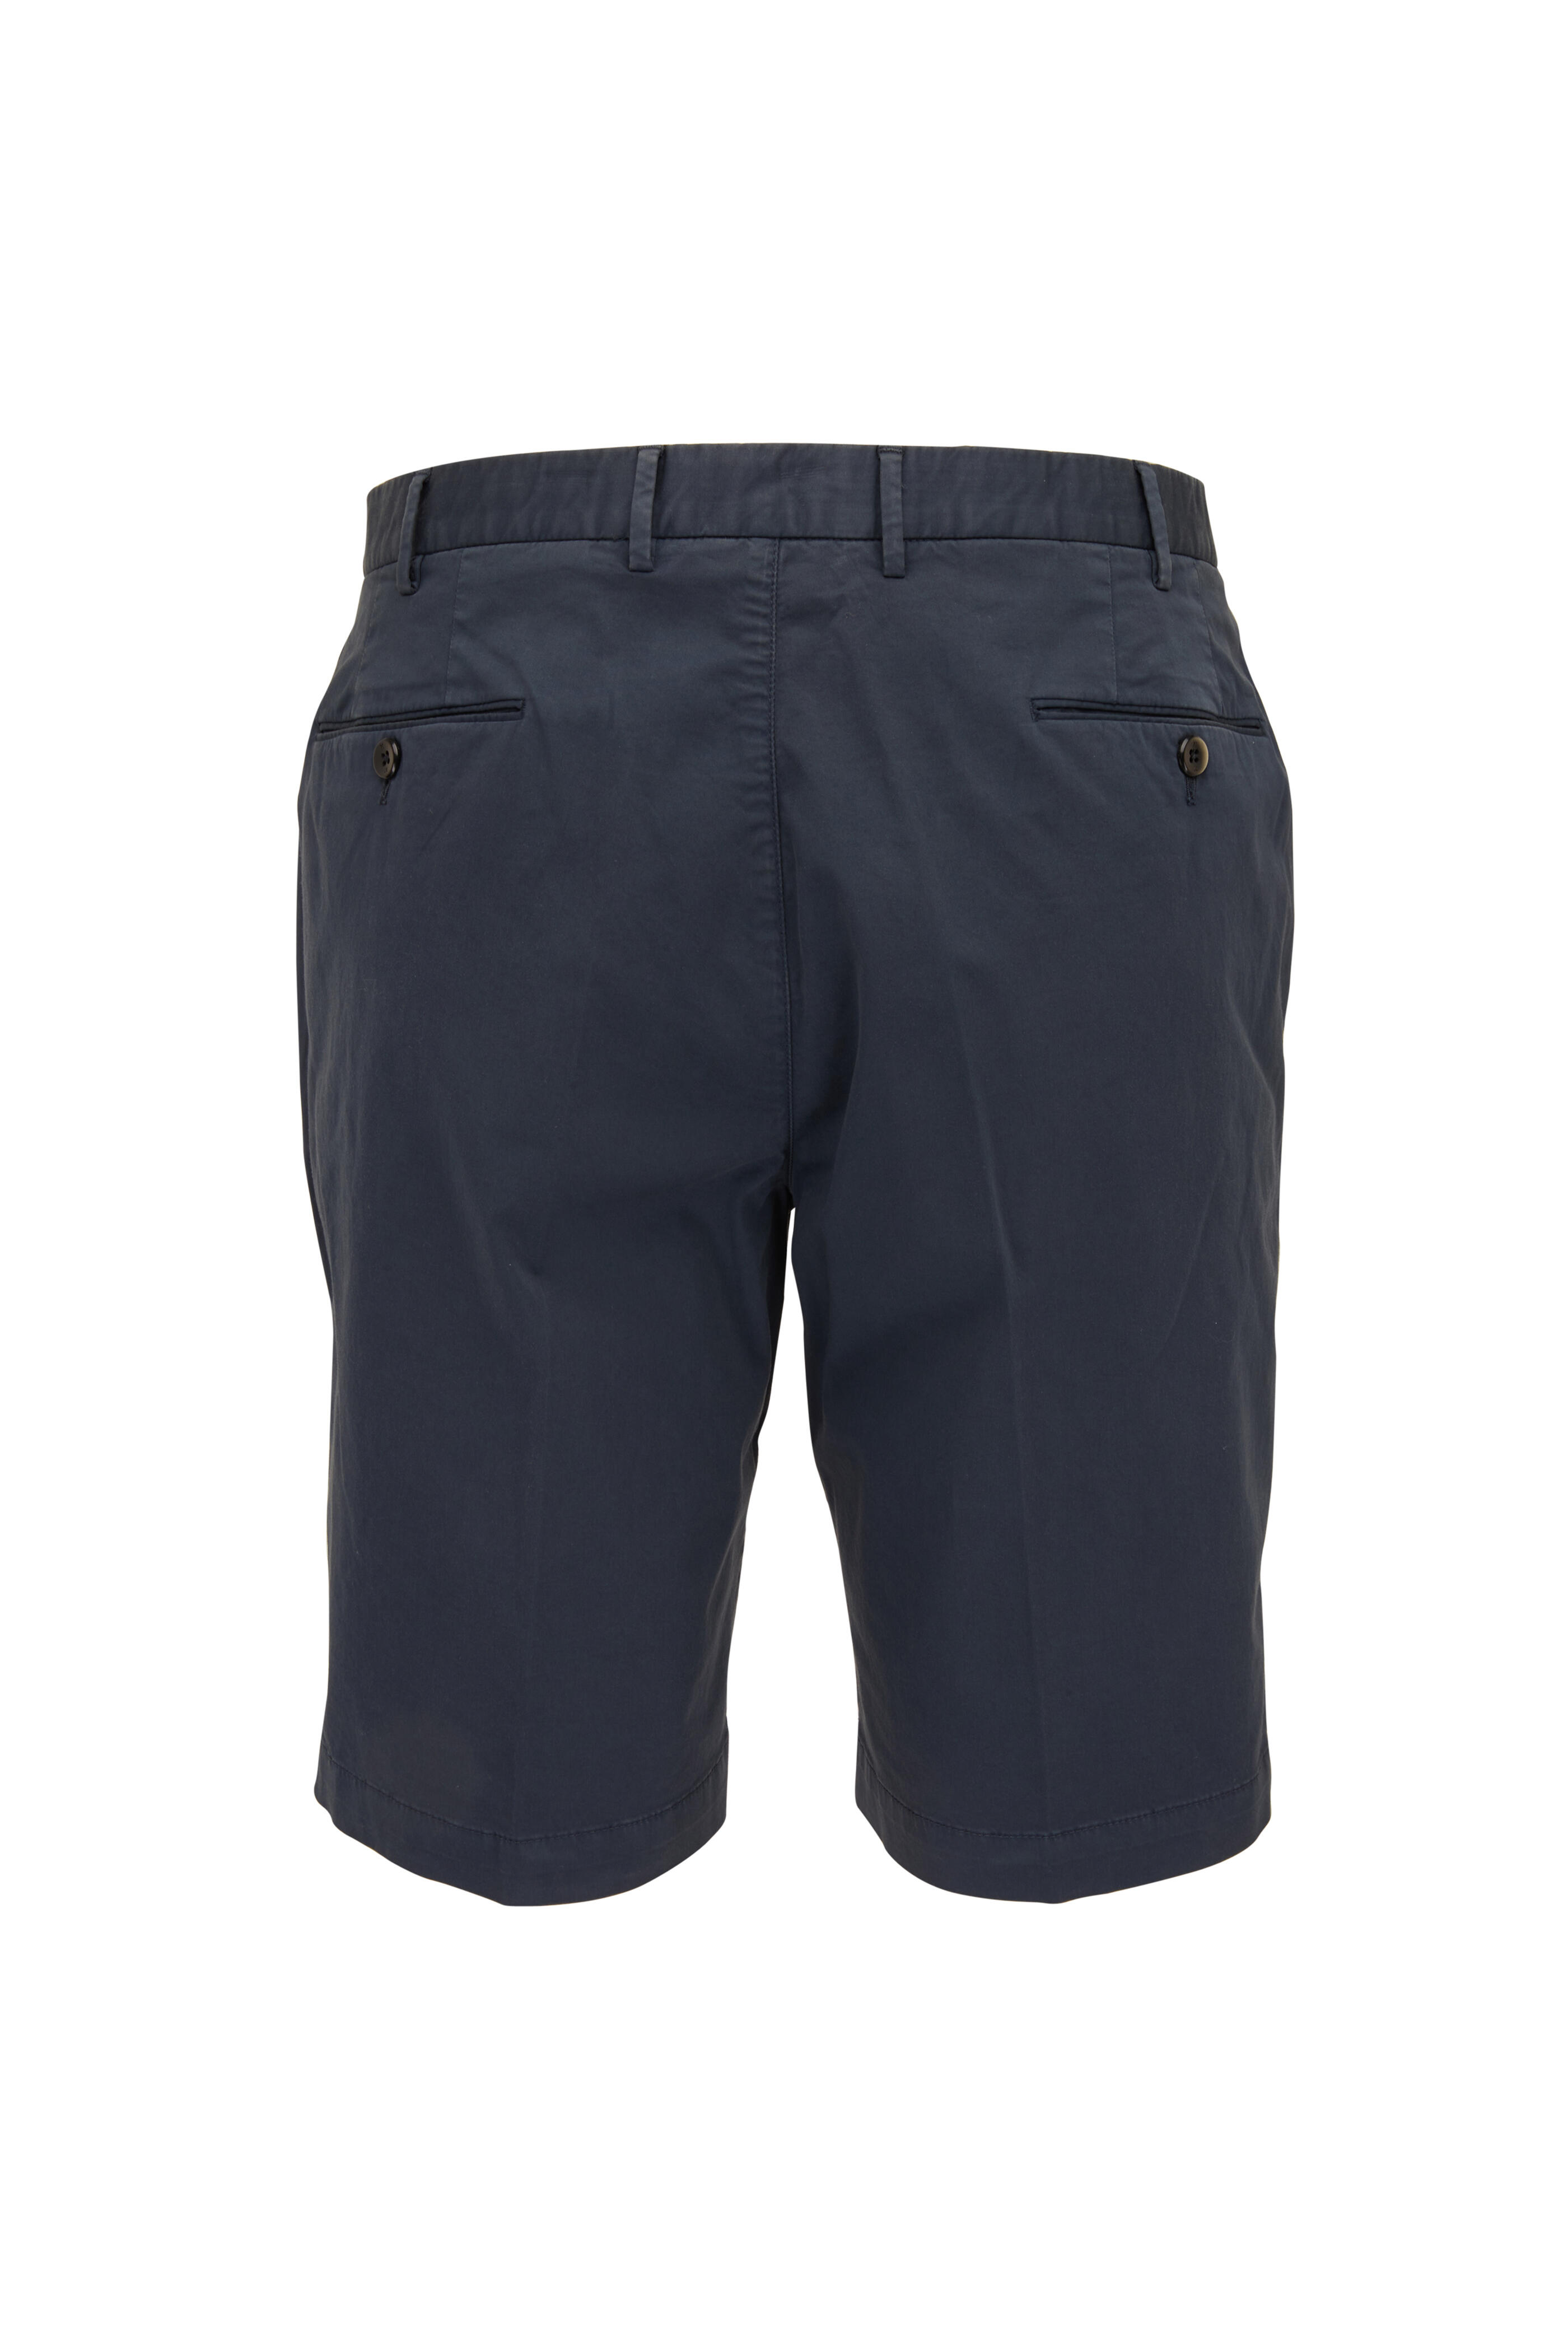 PT Torino - Bermuda Navy Soft Touch Shorts | Mitchell Stores